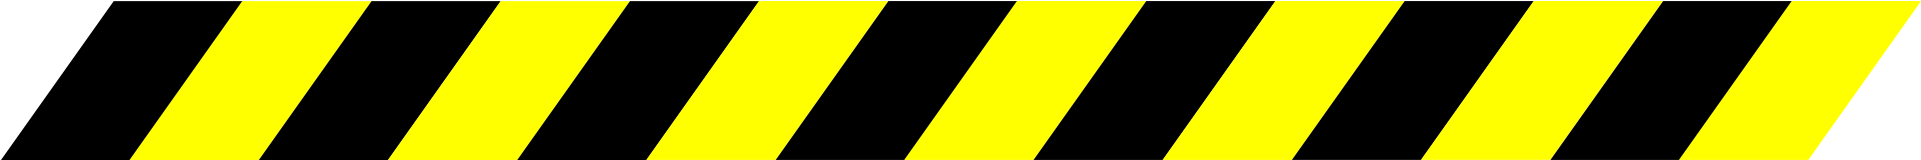 Border, Warning, Hazard, Stripes, Caution, Black - Transparent Background Caution Tape (1920x960)